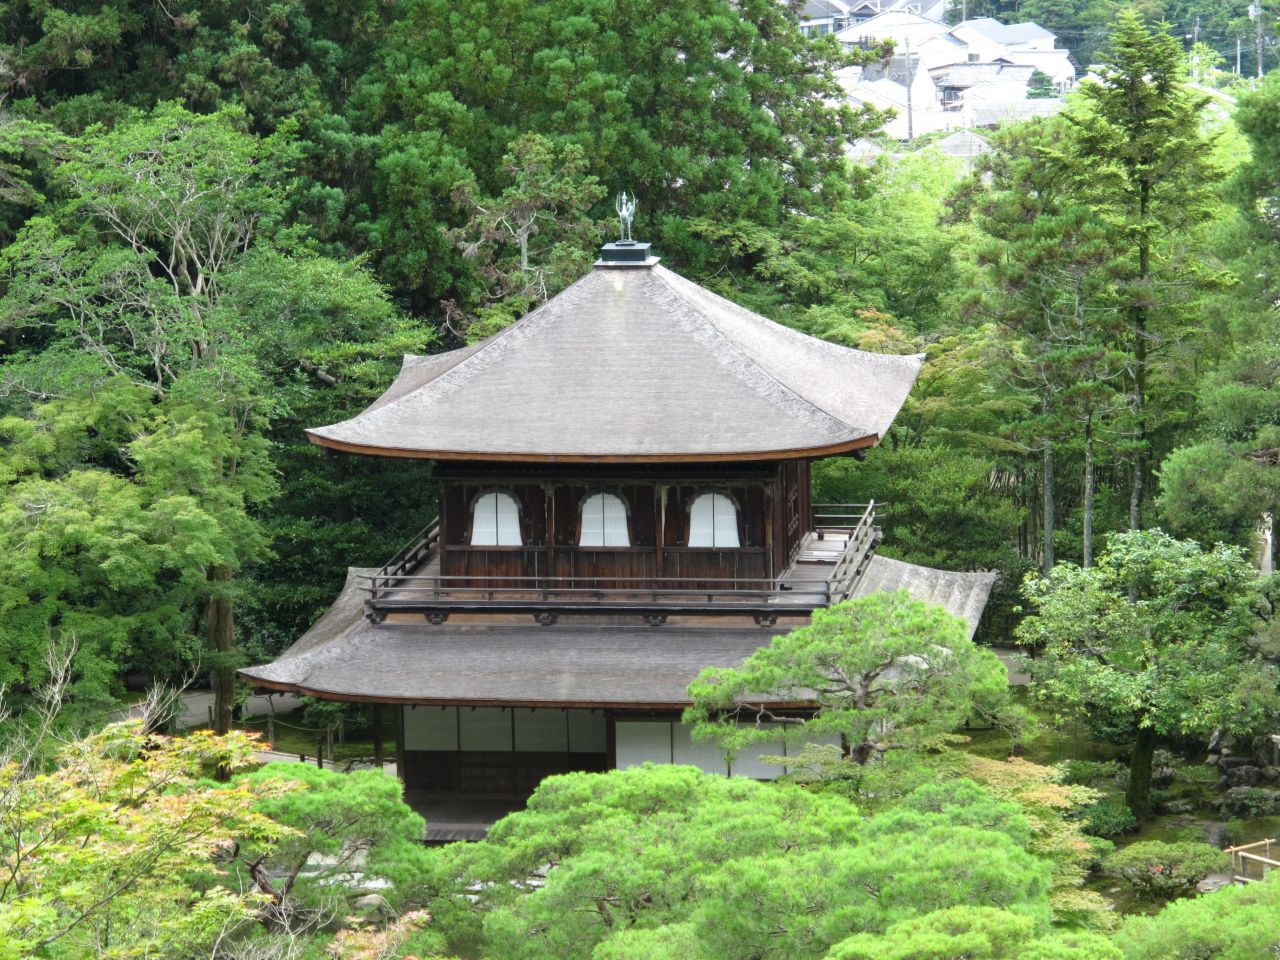 Unlike the extravagant Kinkaku-ji Temple built by his grandfather, Shogun Yoshimitsu's Ginkaku-ji Temple is elegant and simple.